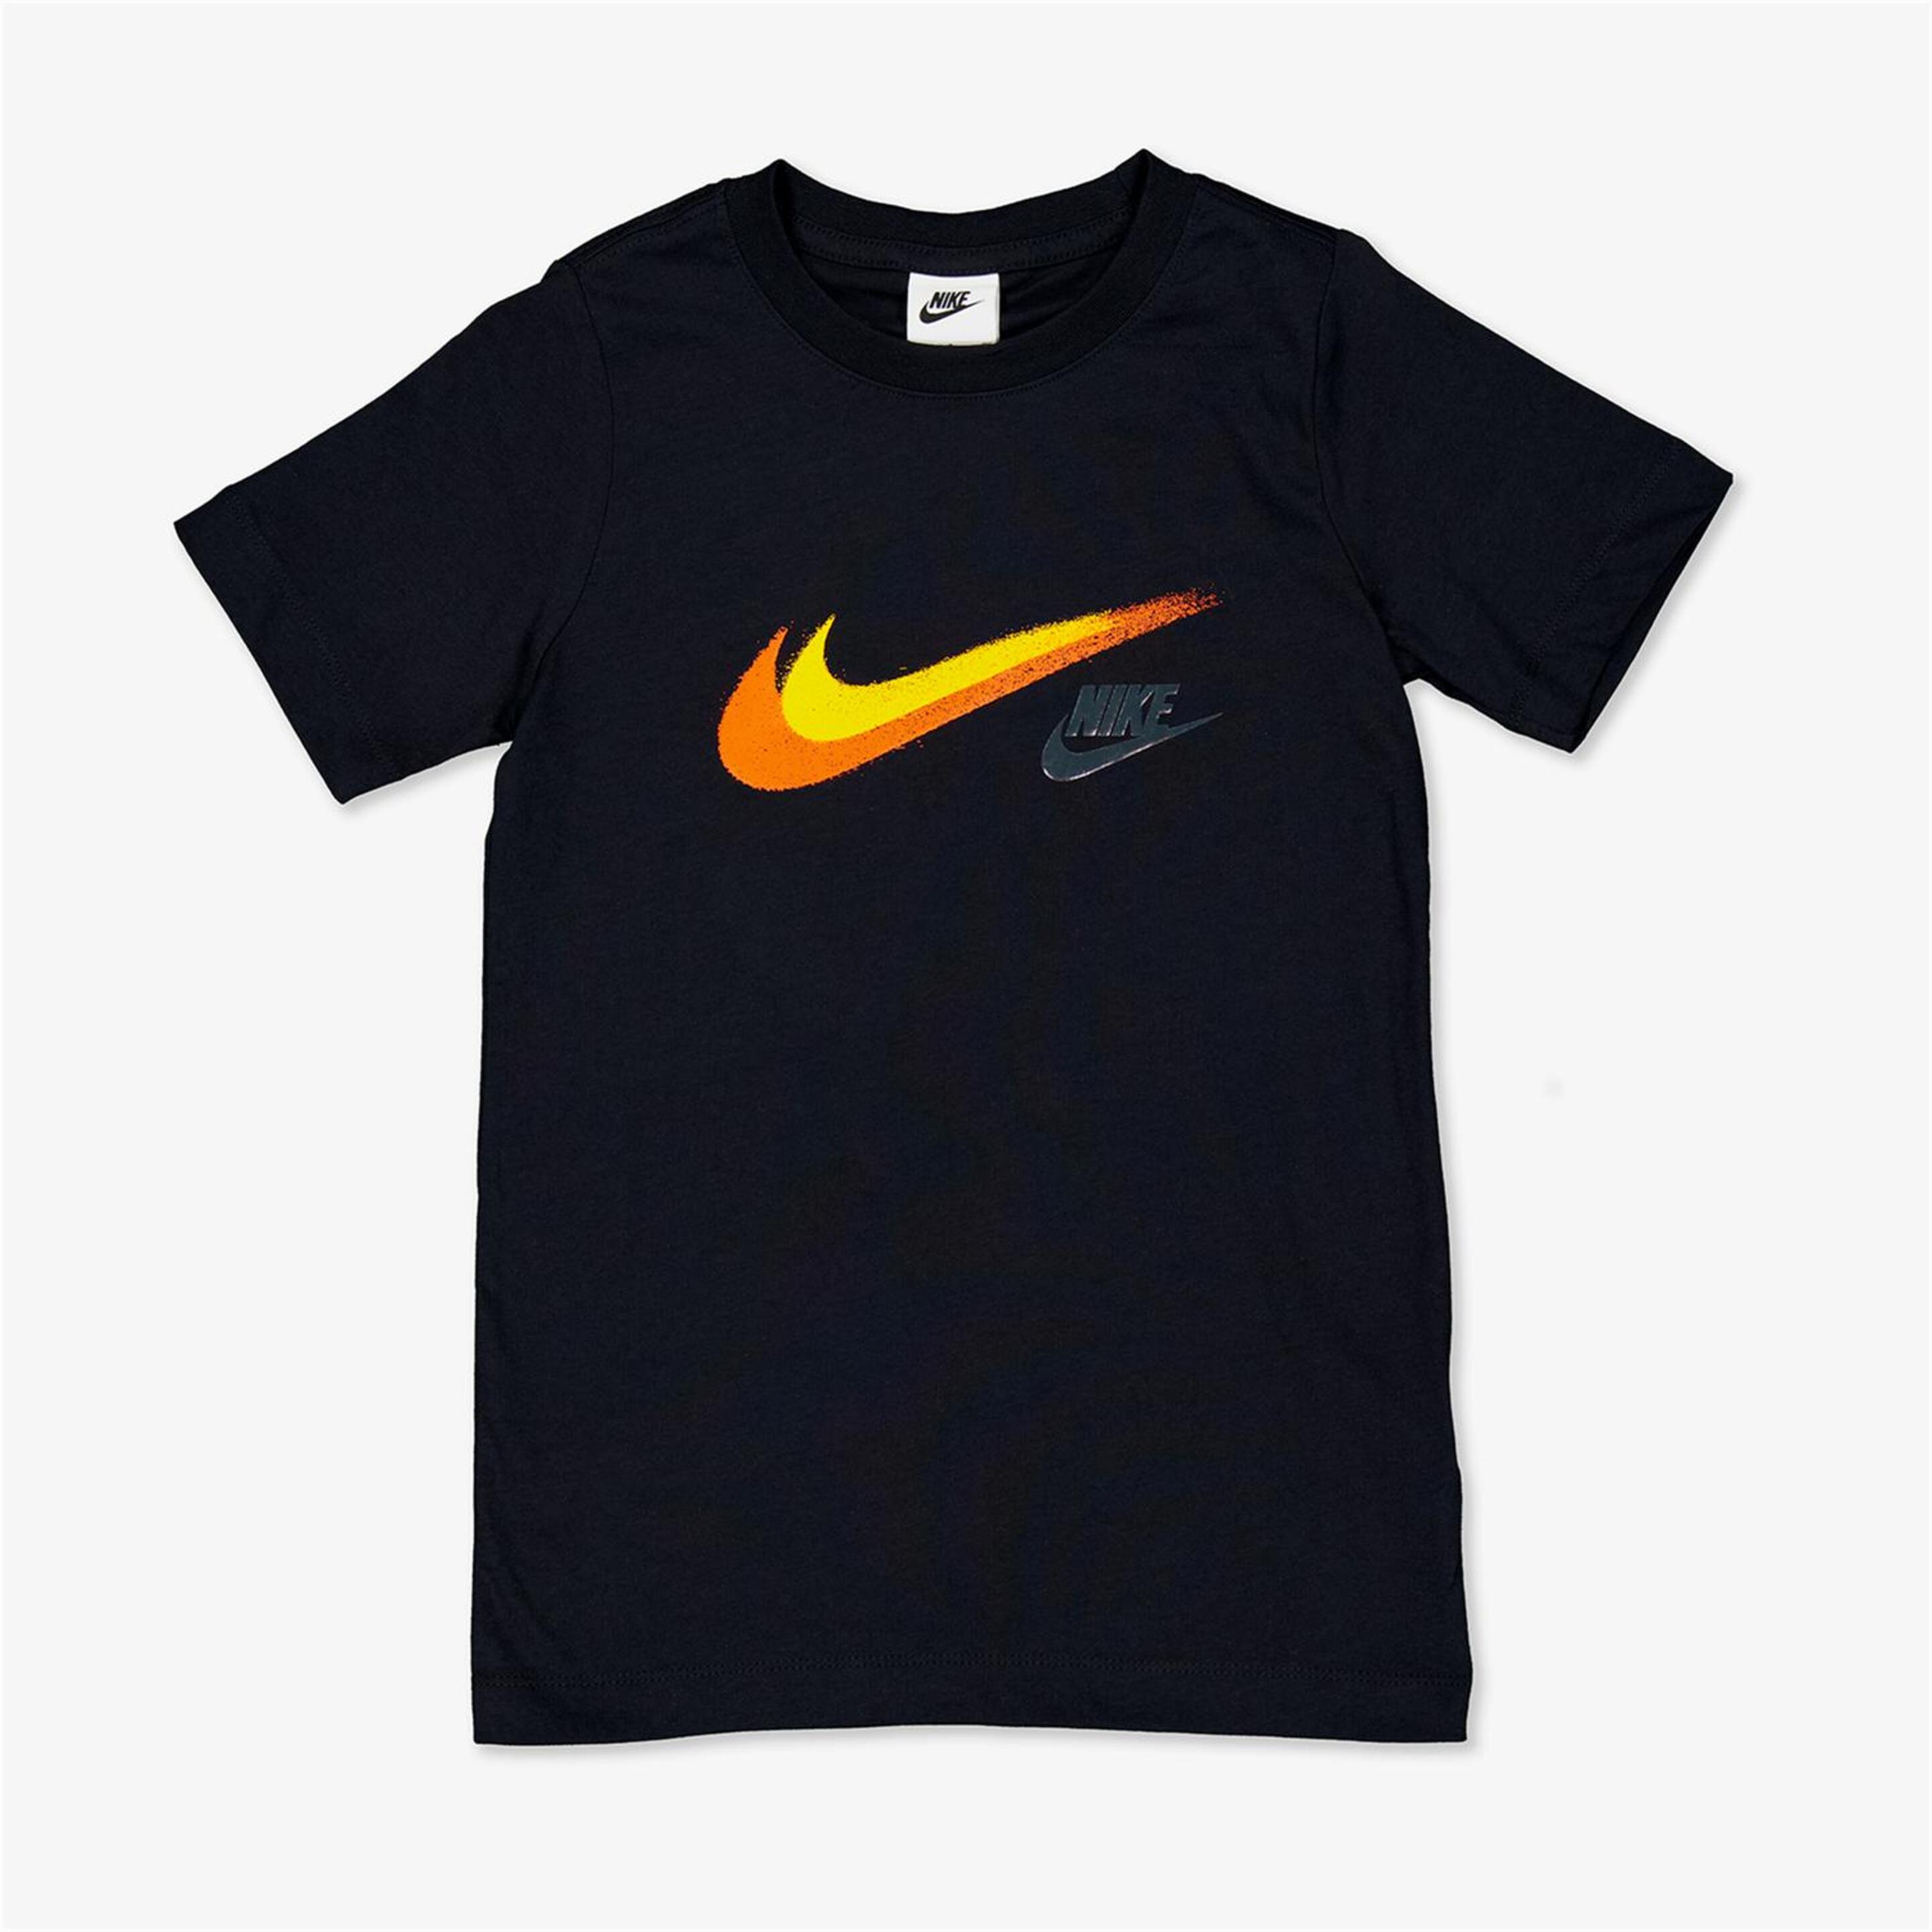 Camiseta Nike - negro - Camiseta Niño